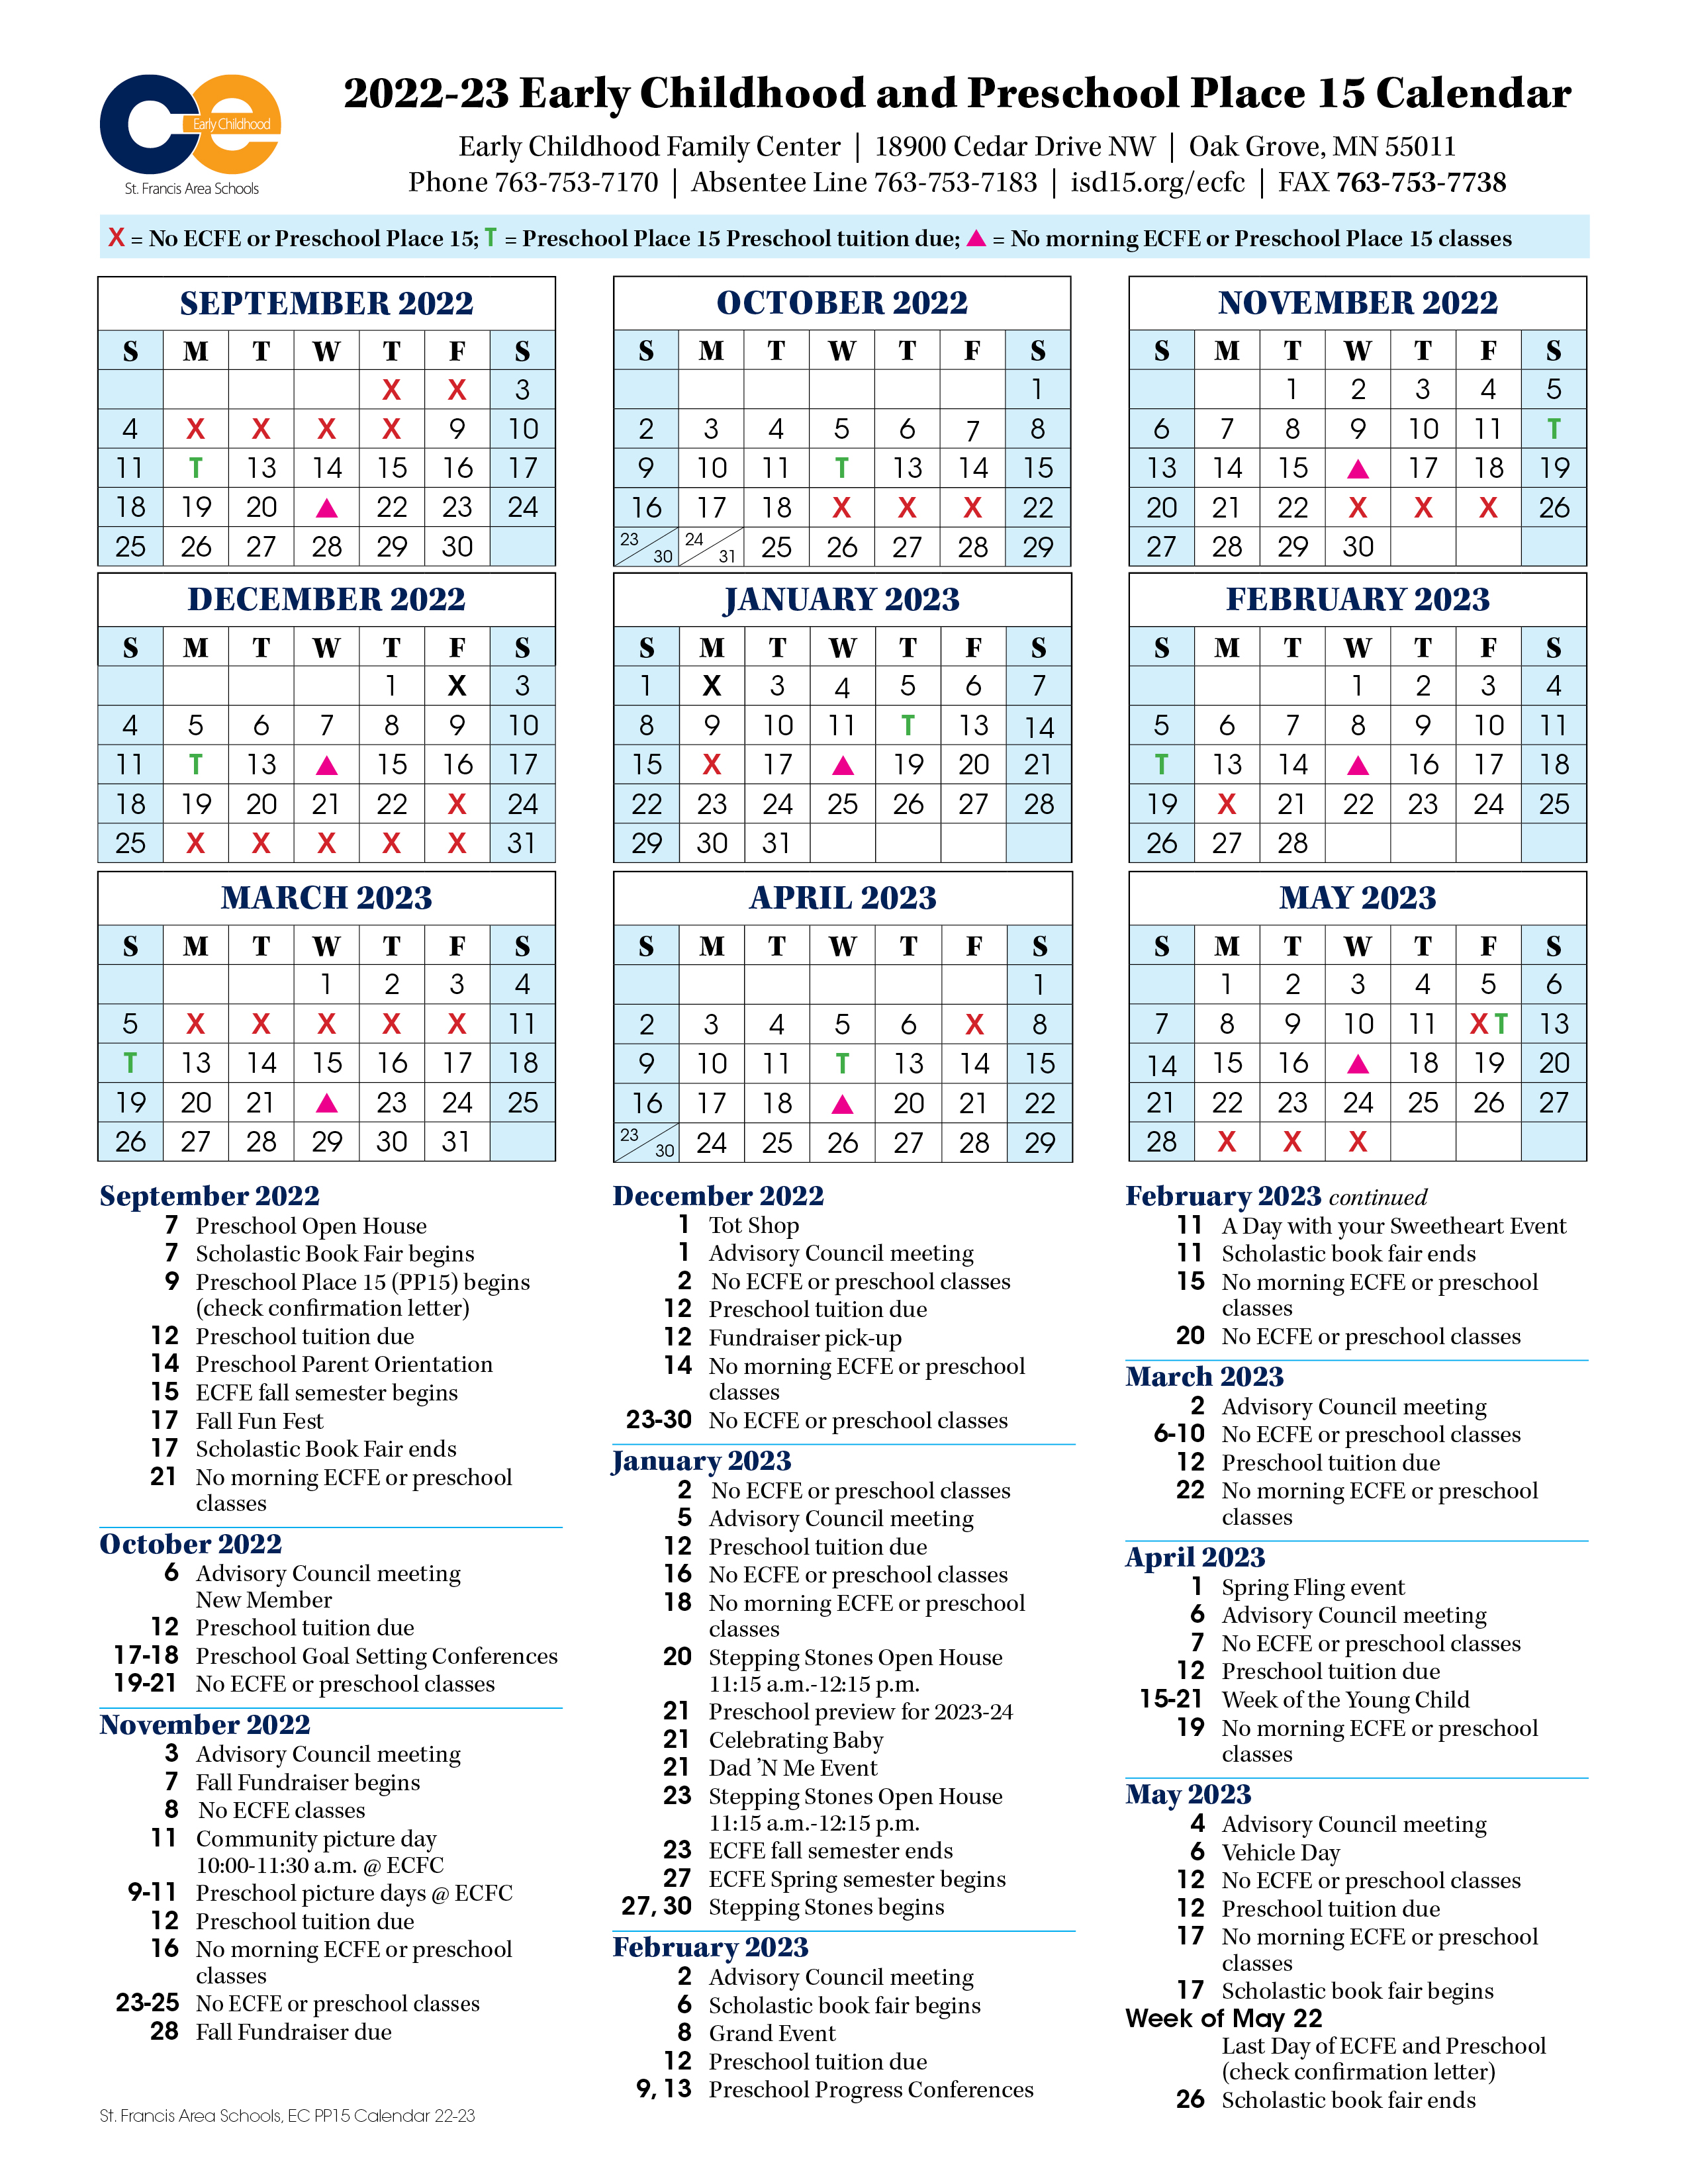 ECFE & Preschool Place 15 calendar for 2022-23 school year